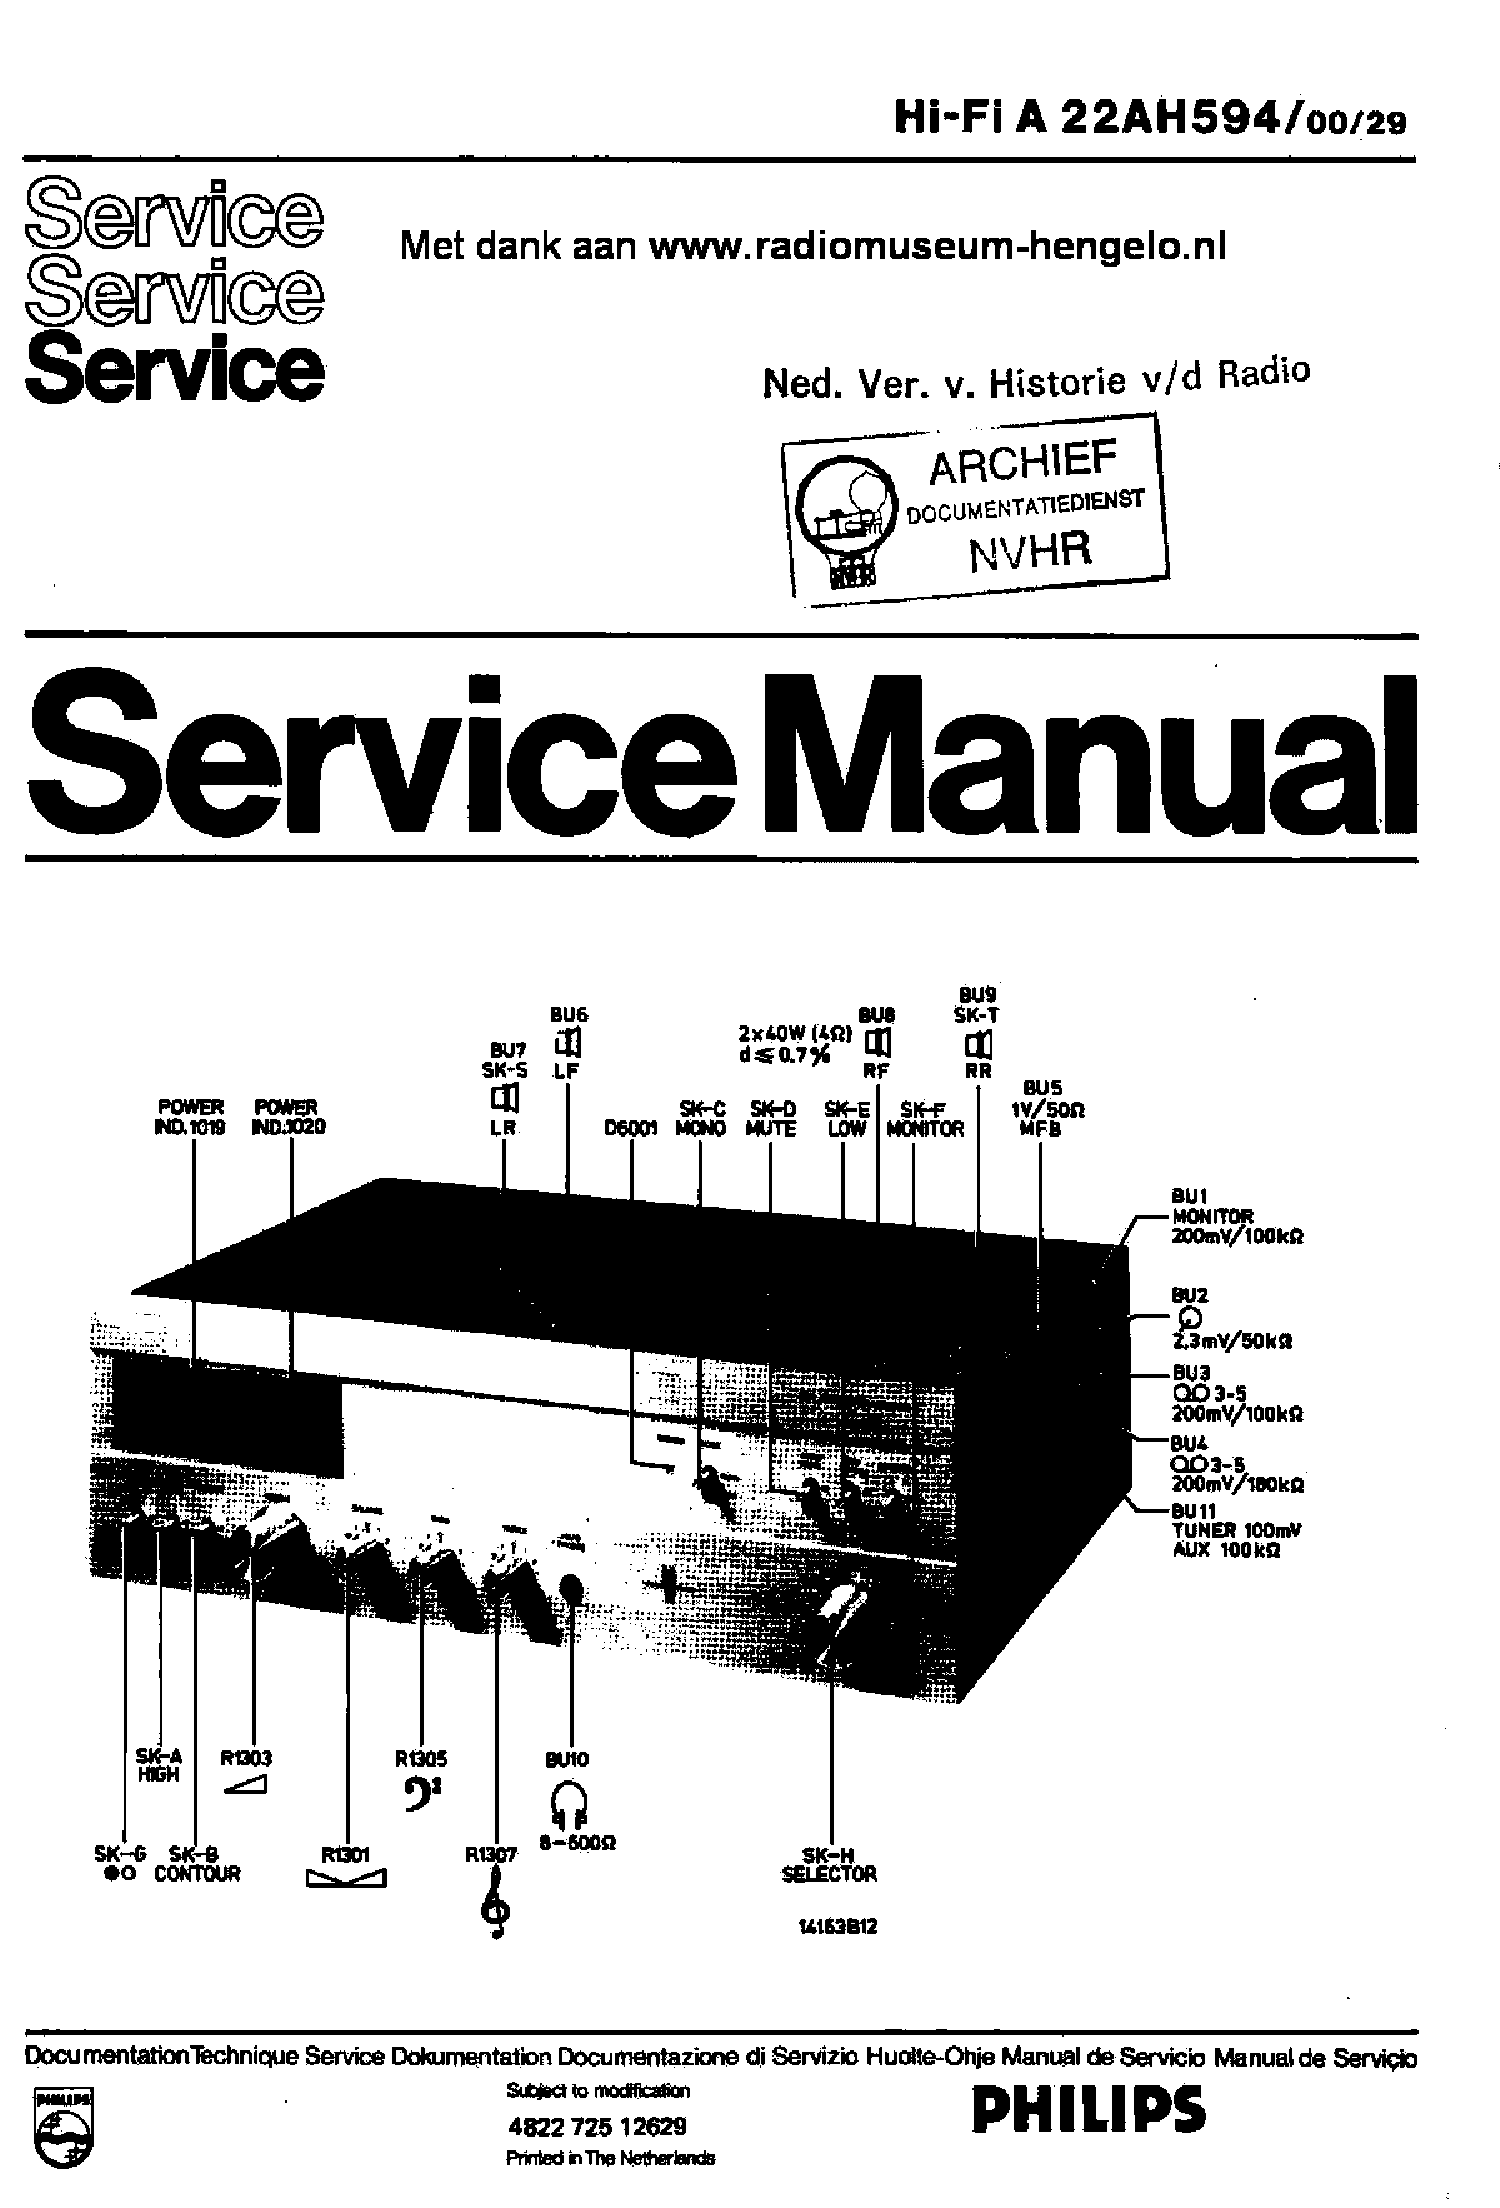 Service Manual-Anleitung für Philips 22 AH 370 